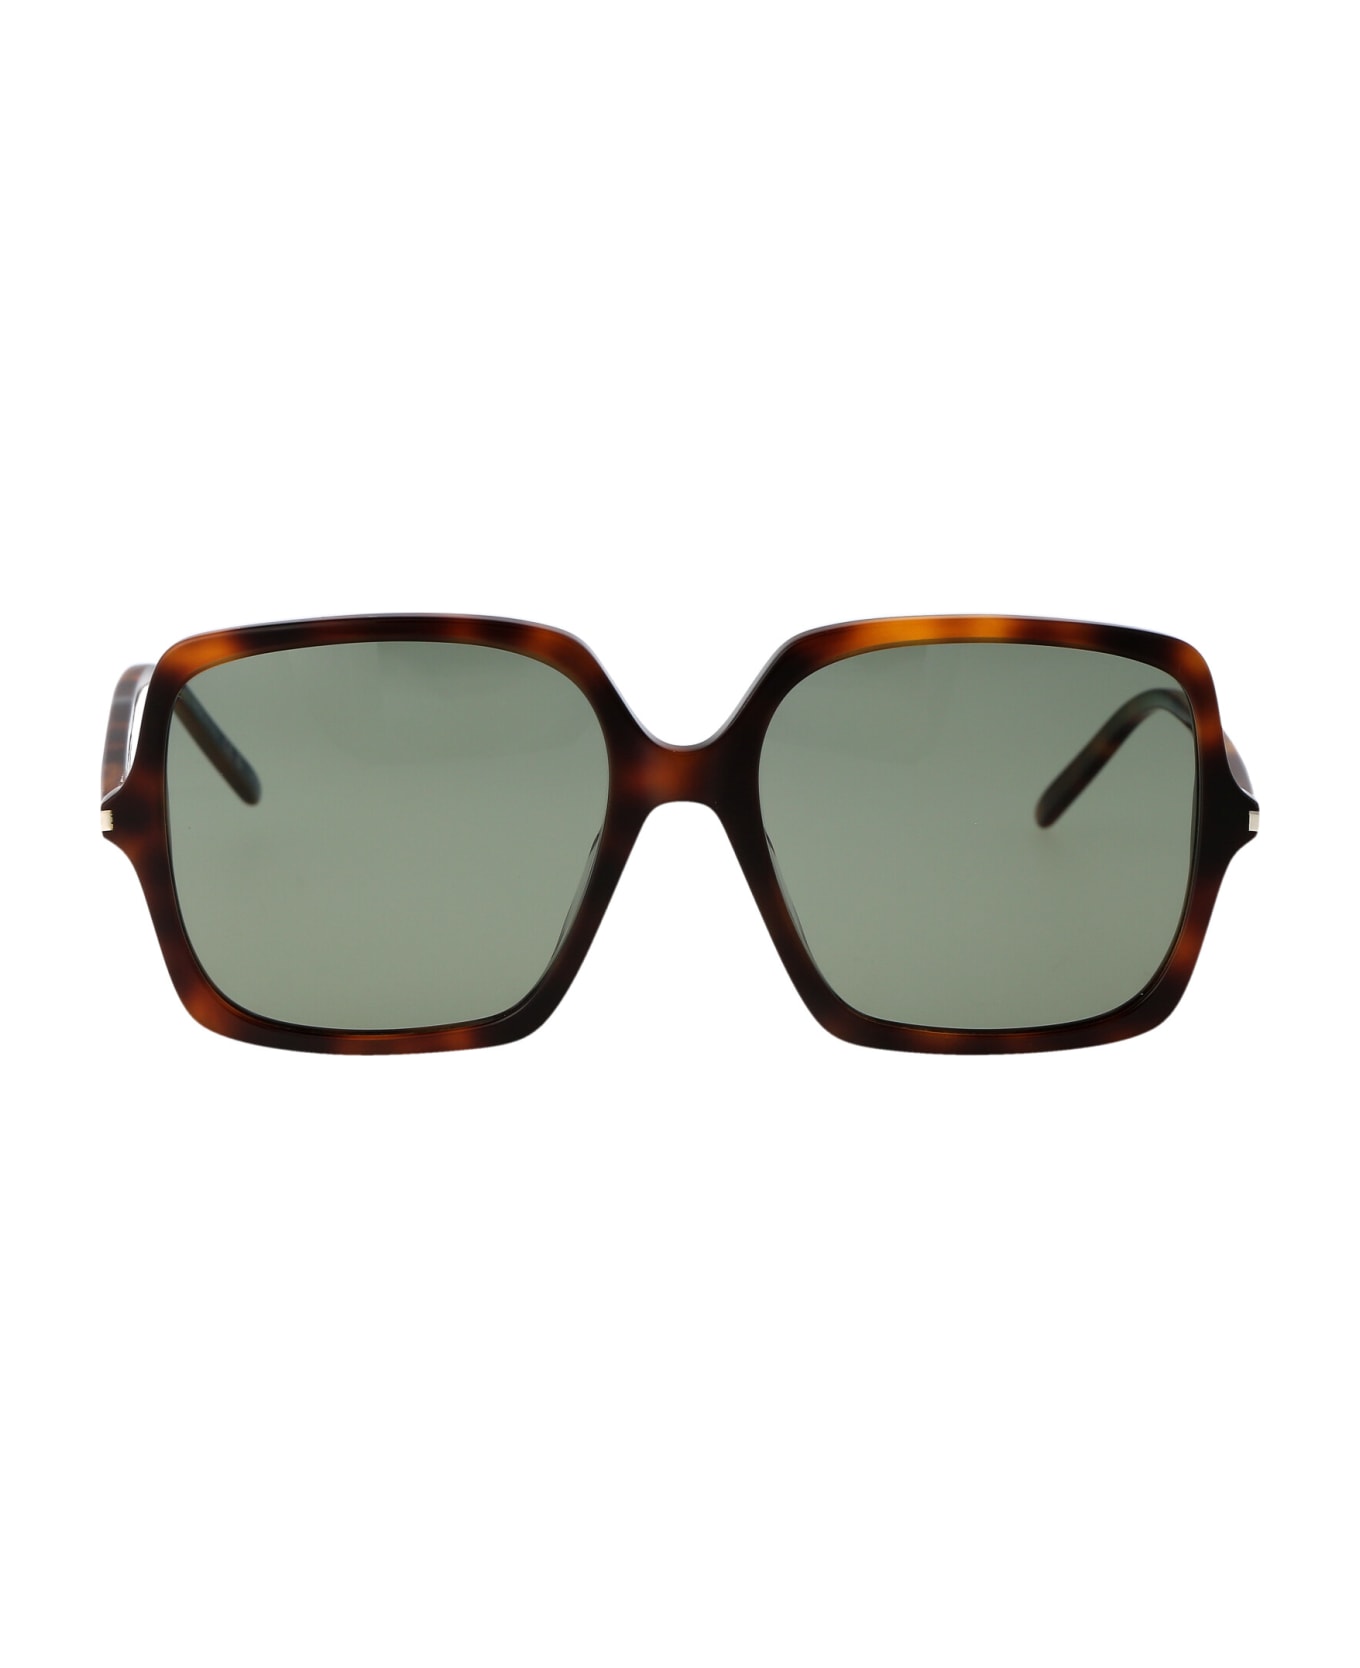 Saint Laurent SL591 002 Sunglasses - US